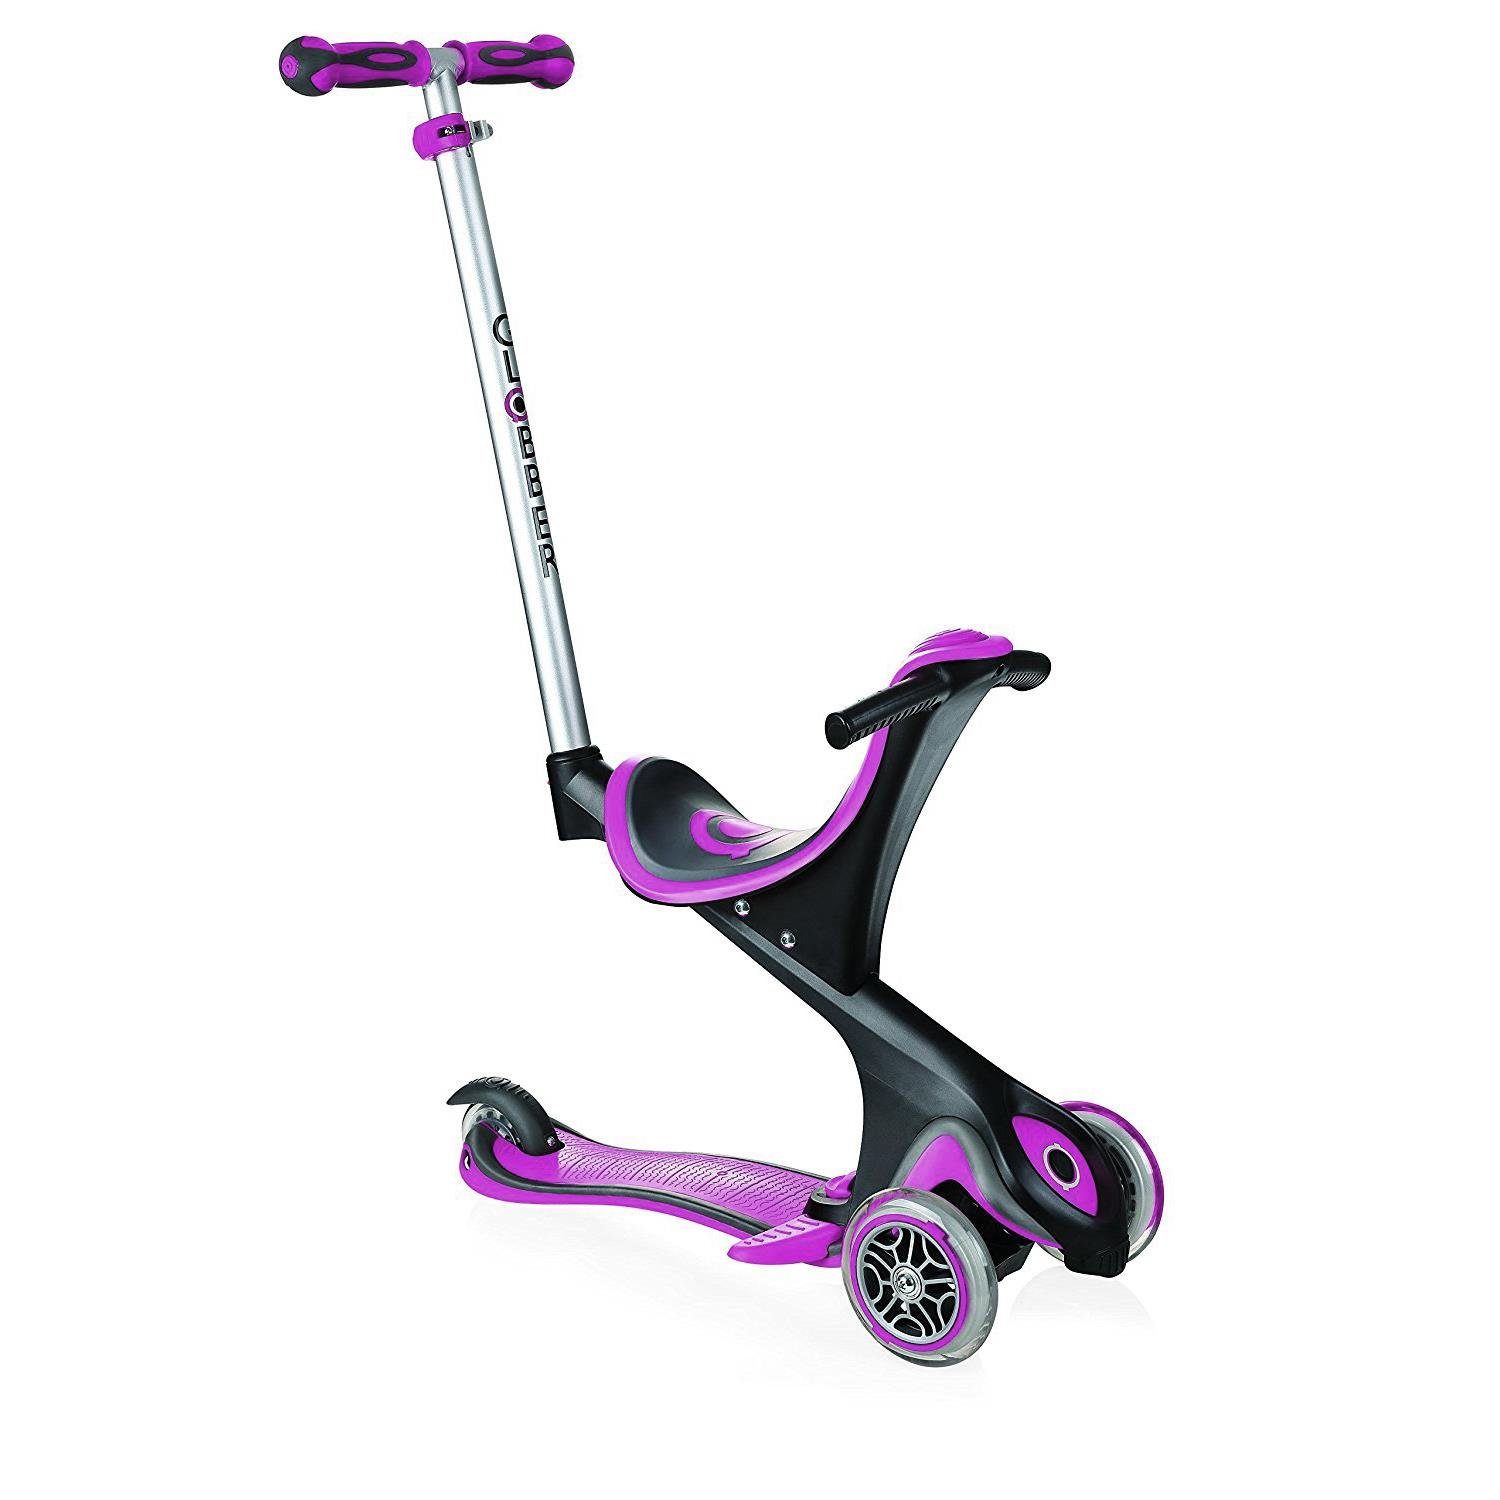 Scooter in sports 458-110 pink/schwarz GLOBBER Pink Evo 5 authentic Comfort & 1, - toys Schwarz